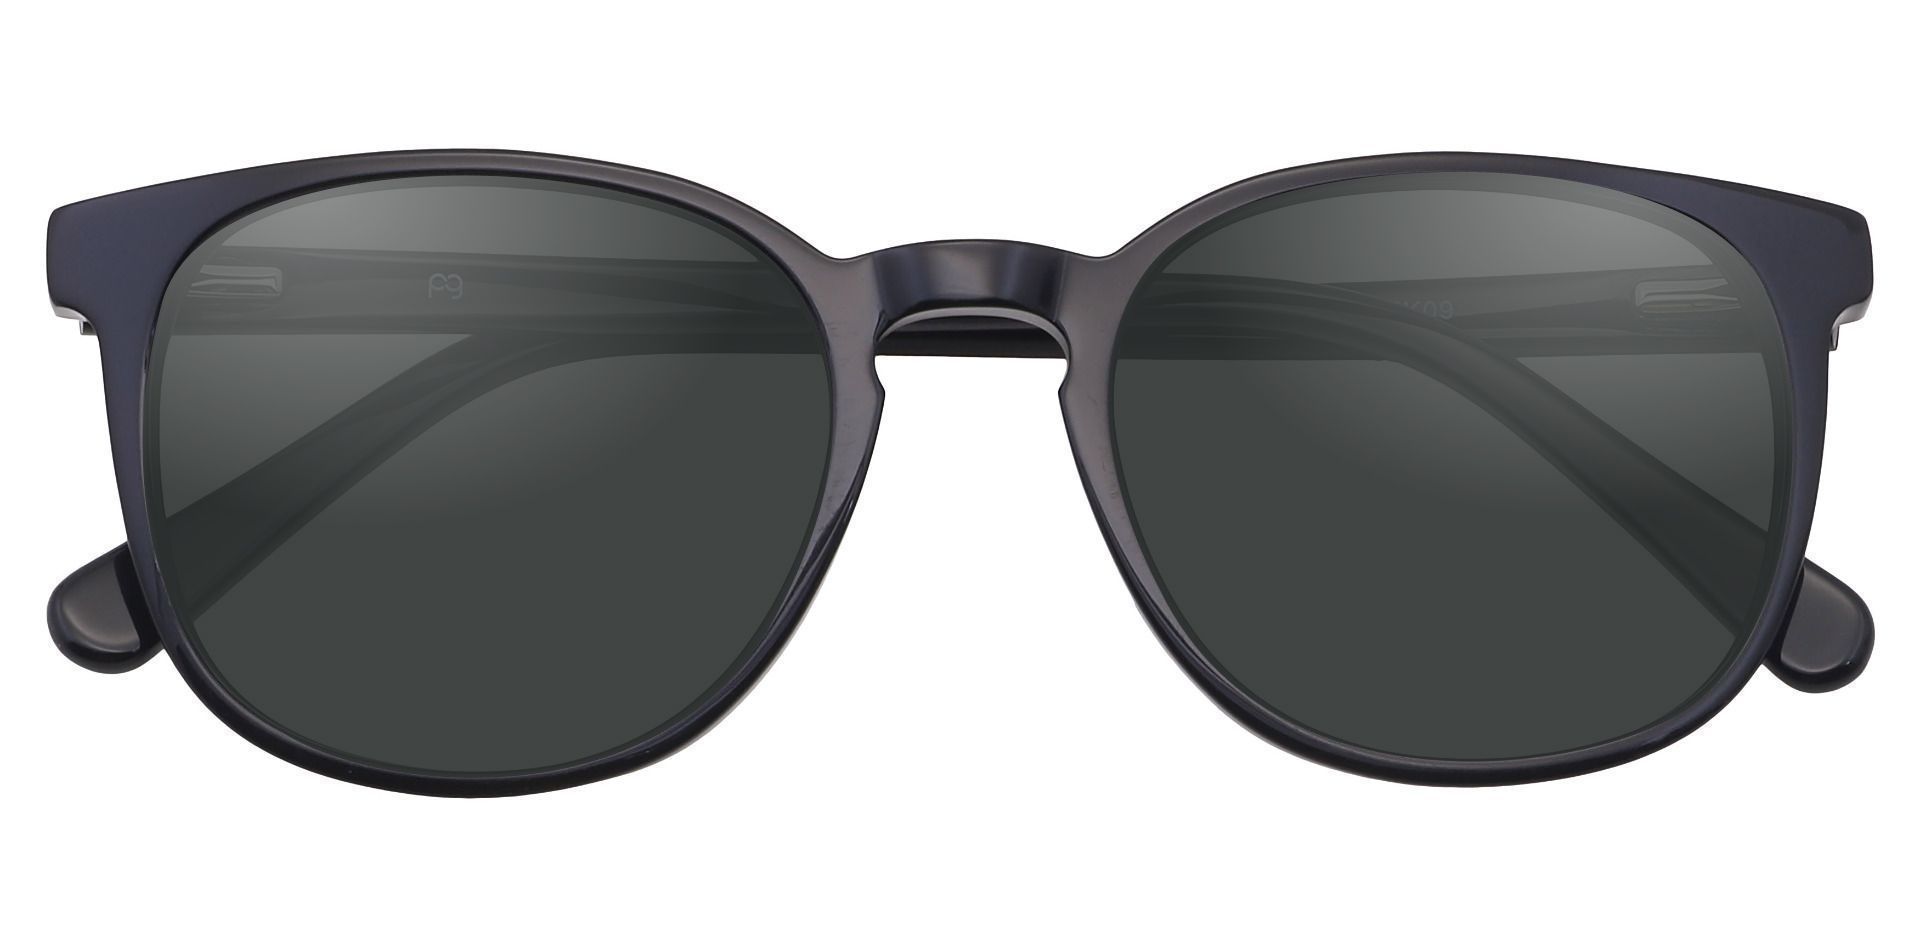 Nebula Round Lined Bifocal Sunglasses - Black Frame With Gray Lenses